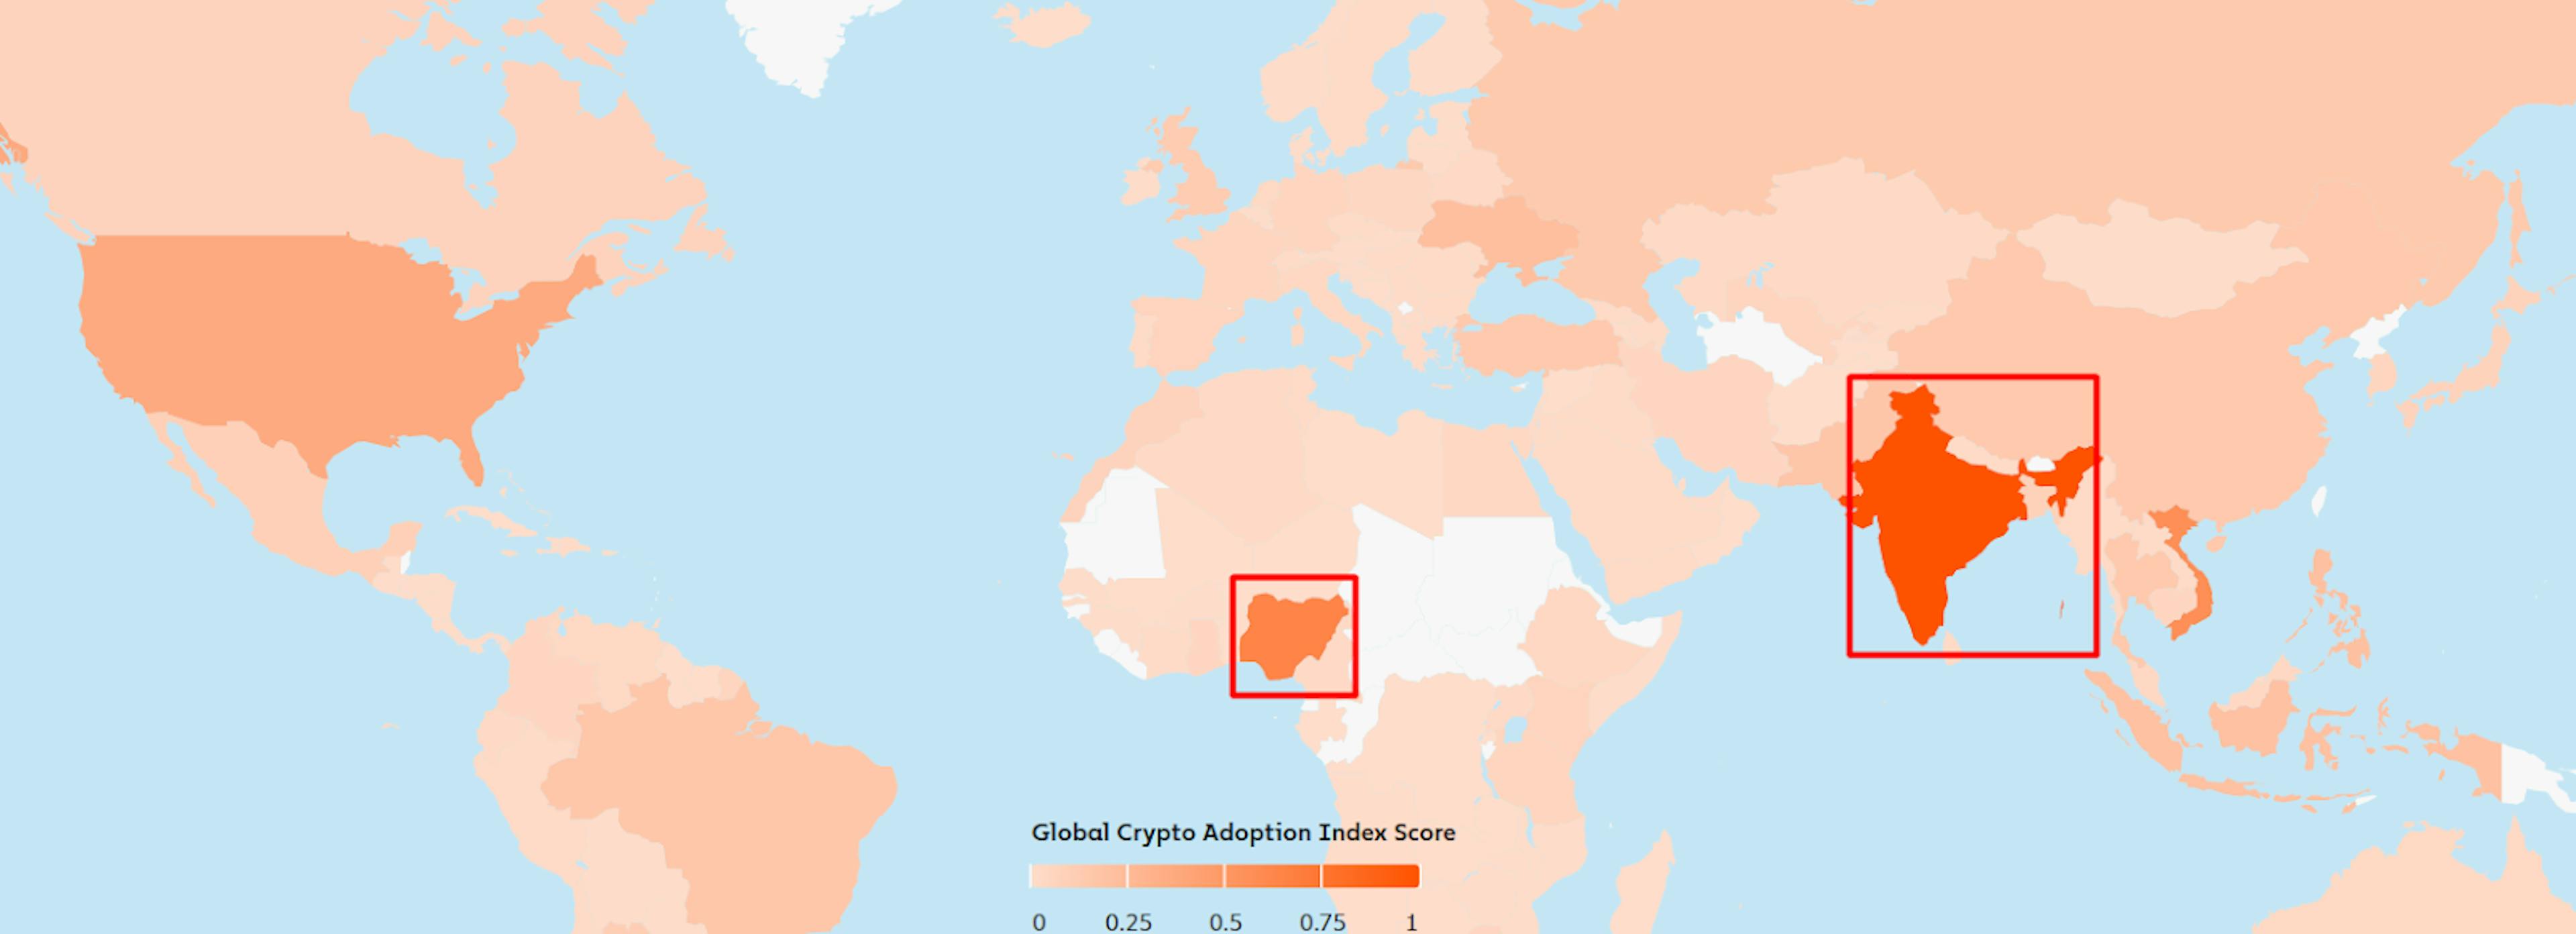 Kaynak: https://www.chainaliz.com/blog/2023-global-crypto-adoption-index/#top20